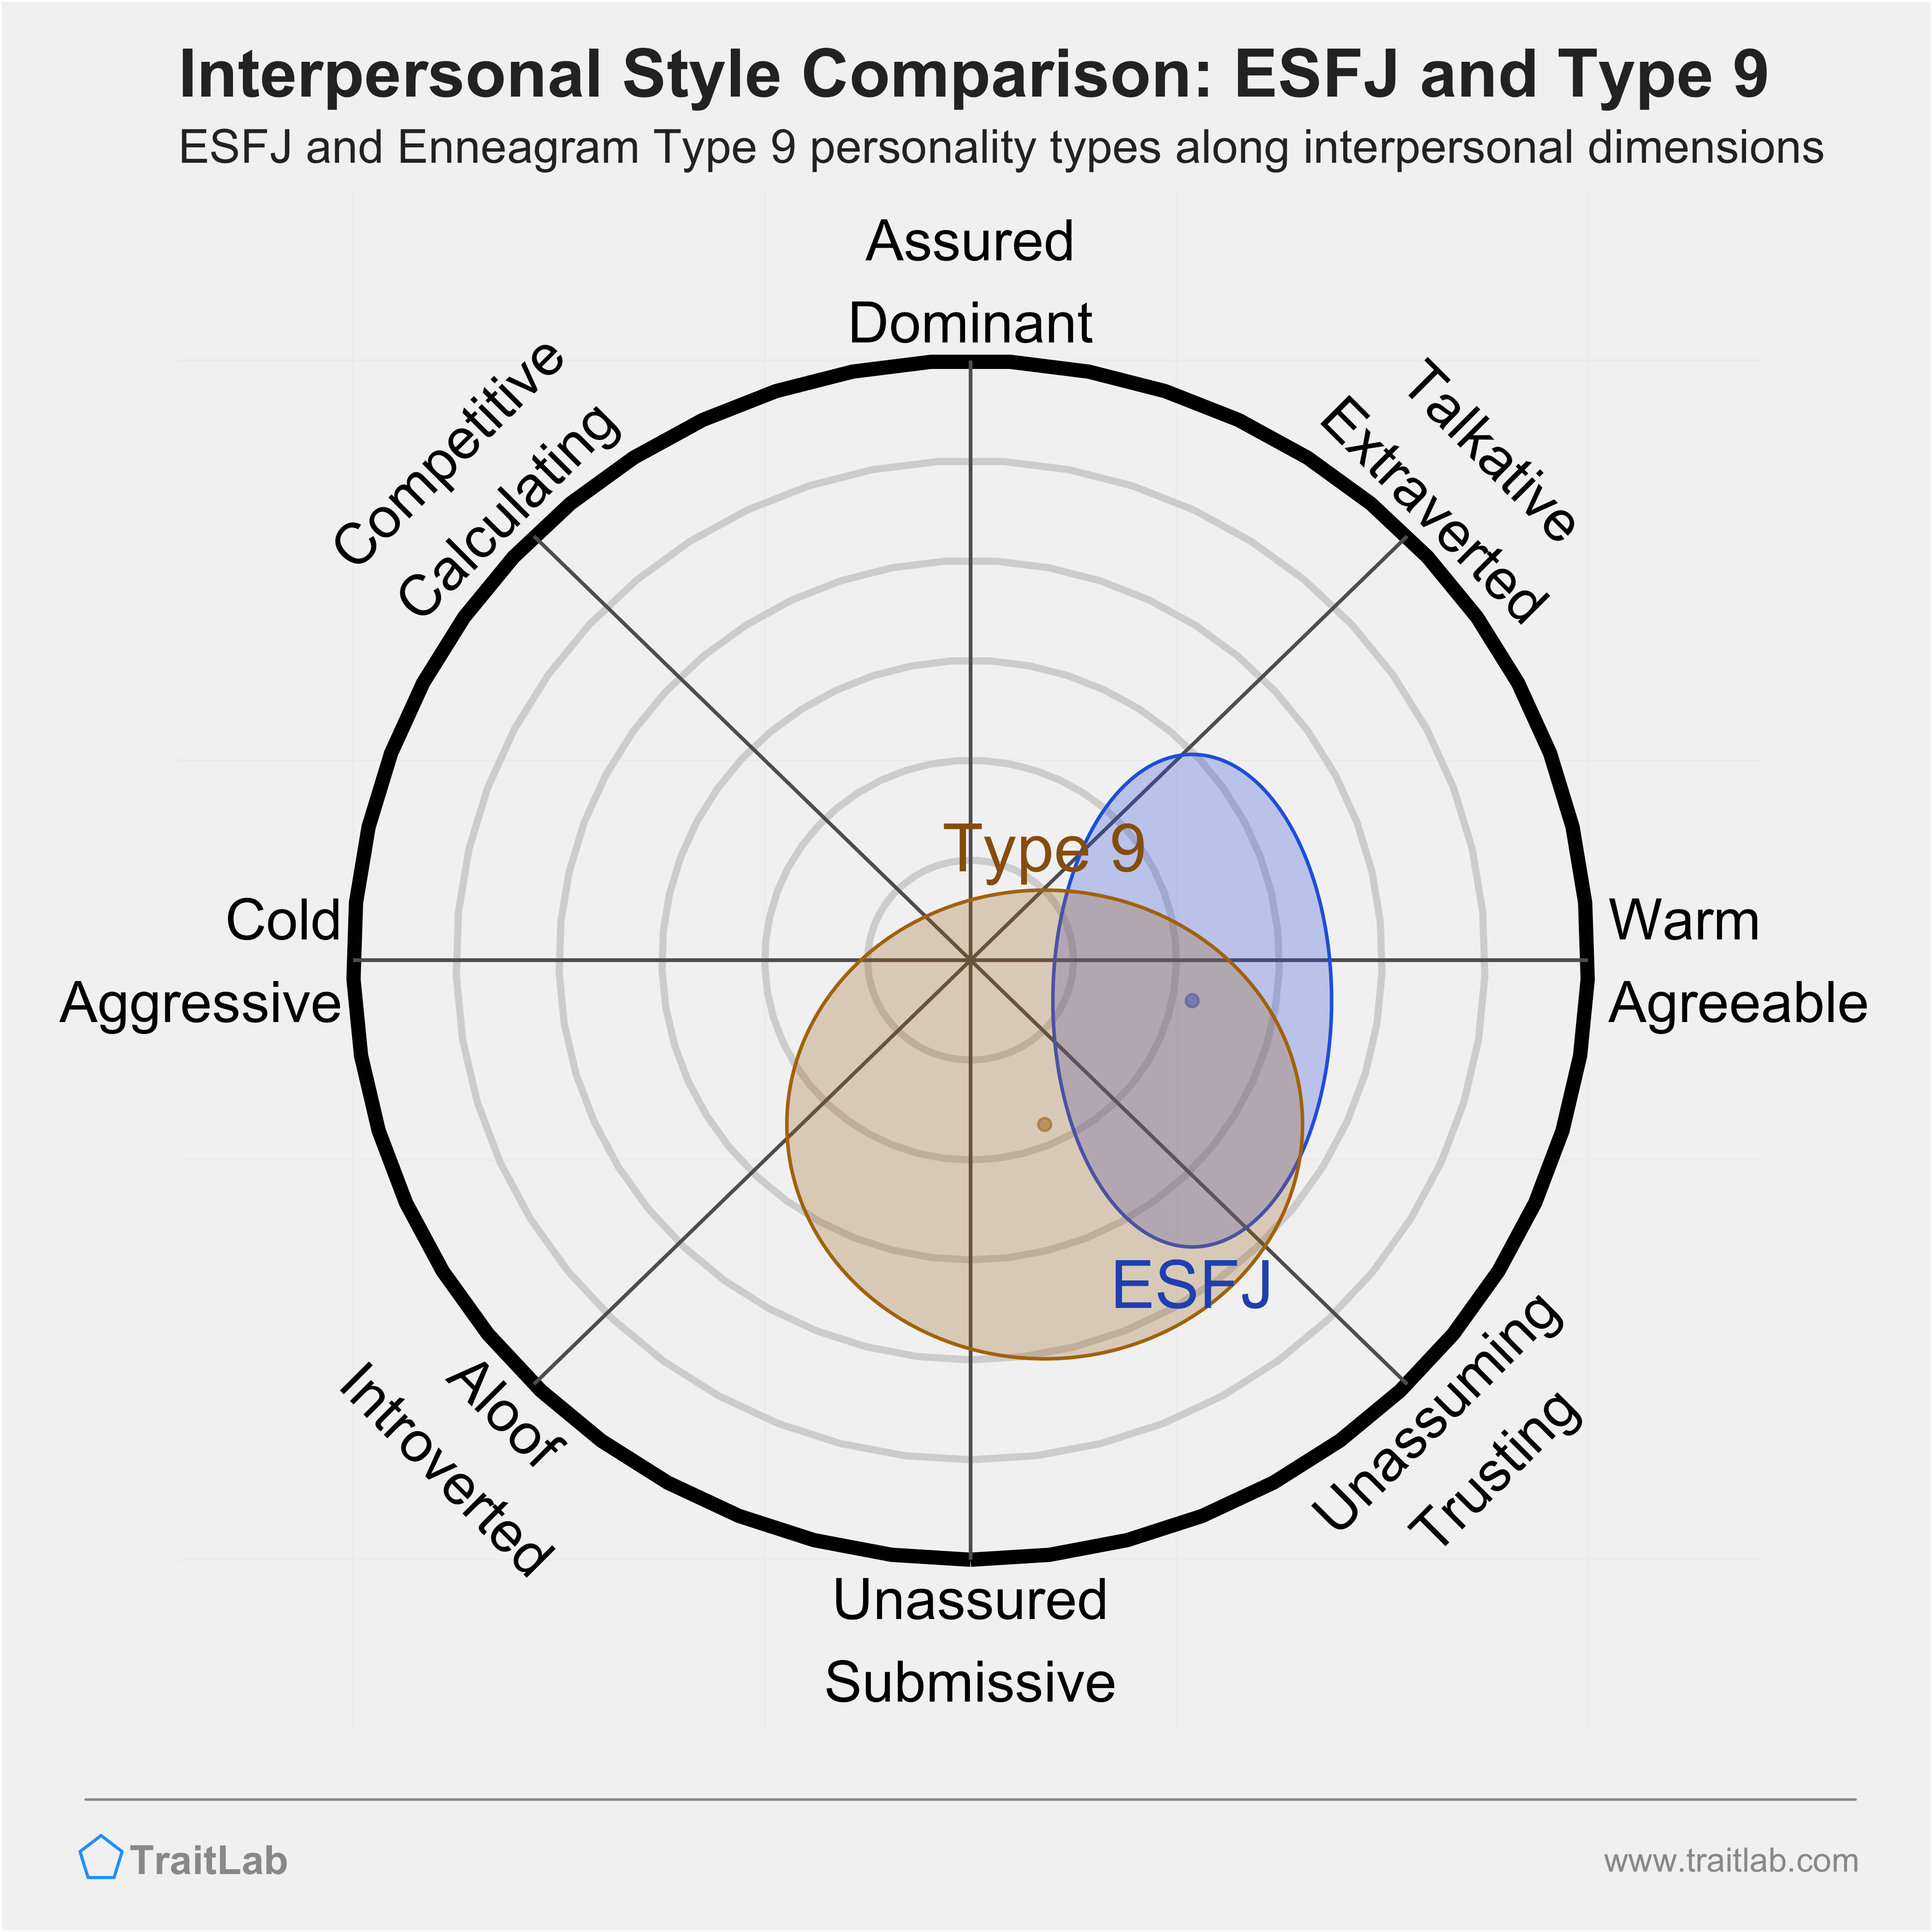 Enneagram ESFJ and Type 9 comparison across interpersonal dimensions